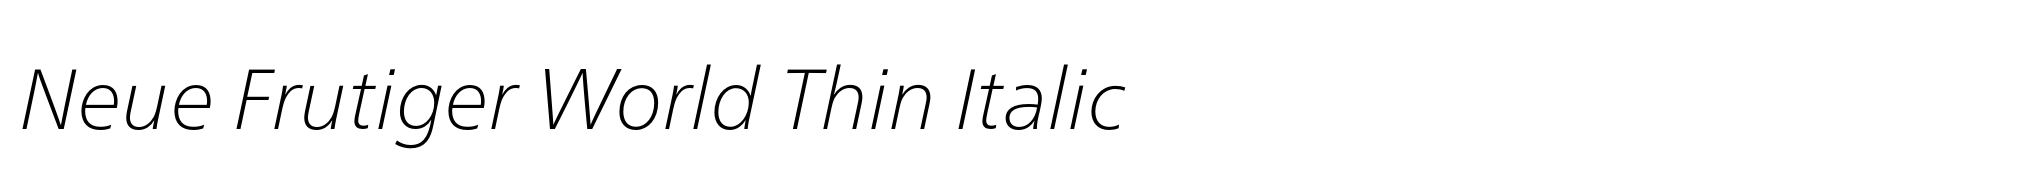 Neue Frutiger World Thin Italic image